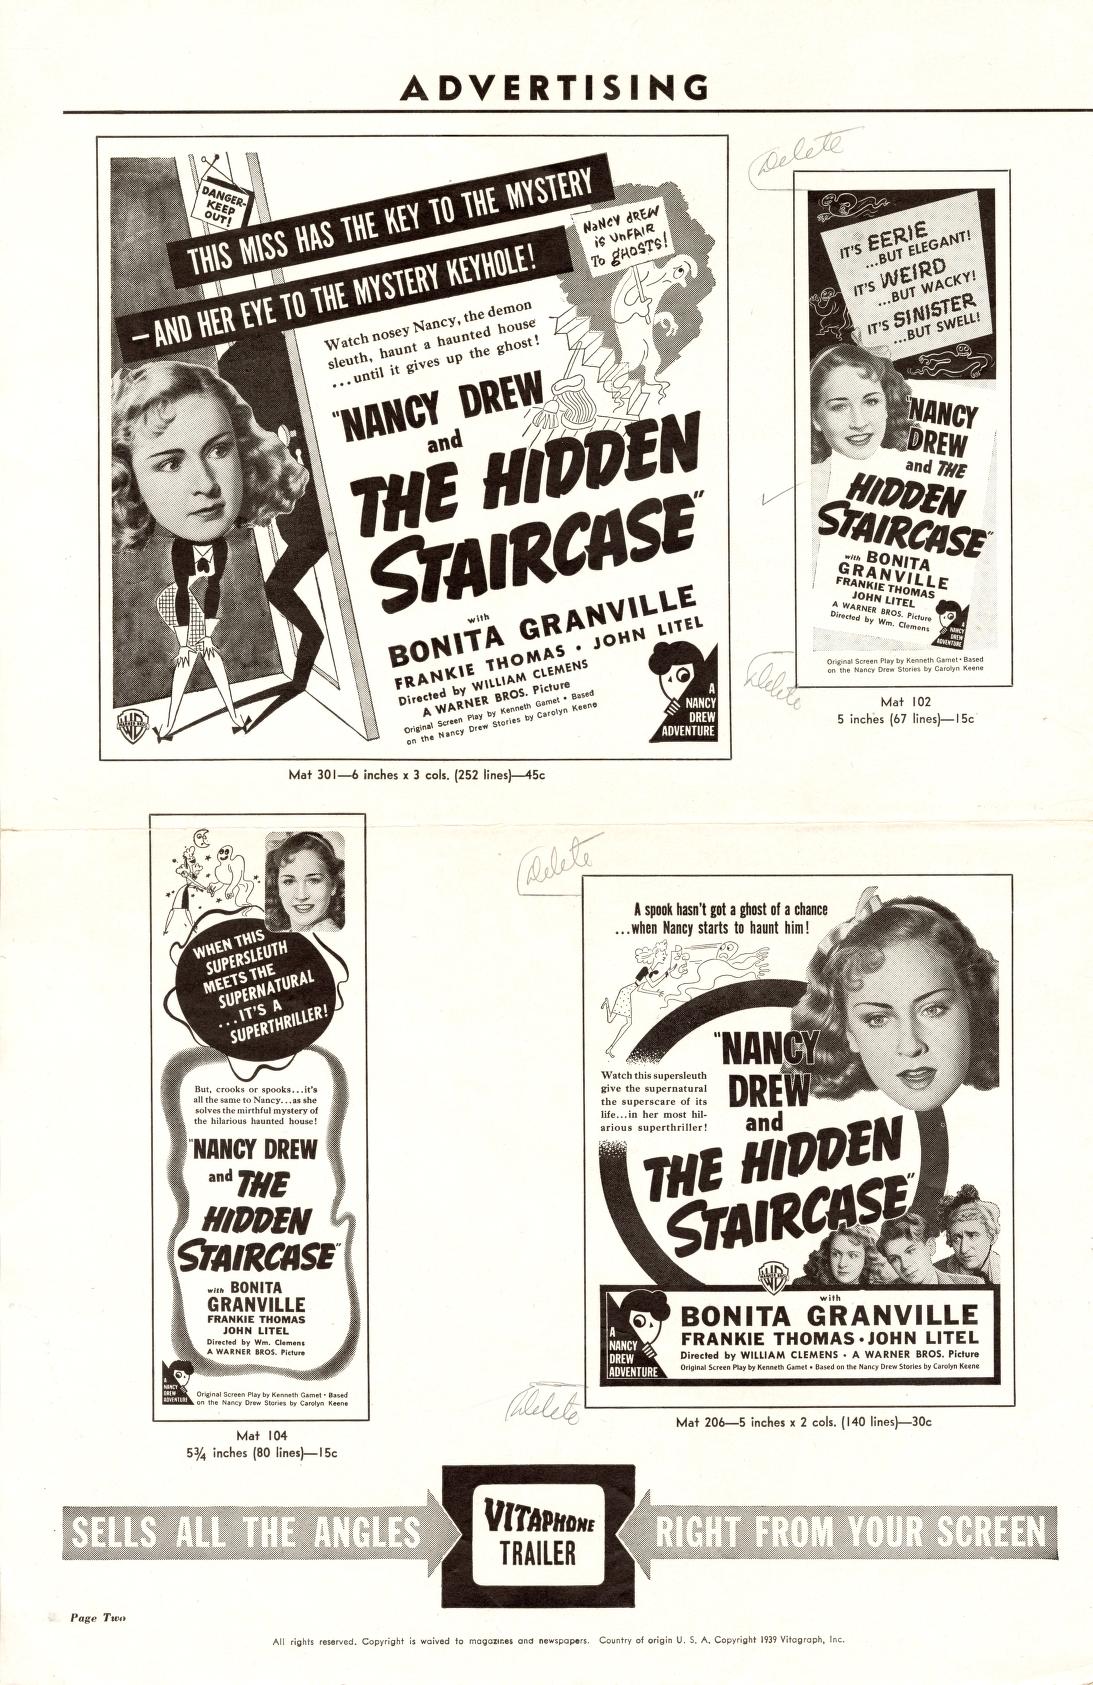 Nancy Drew and the Hidden Staircase(Warner Bros. Pressbook, 1939)